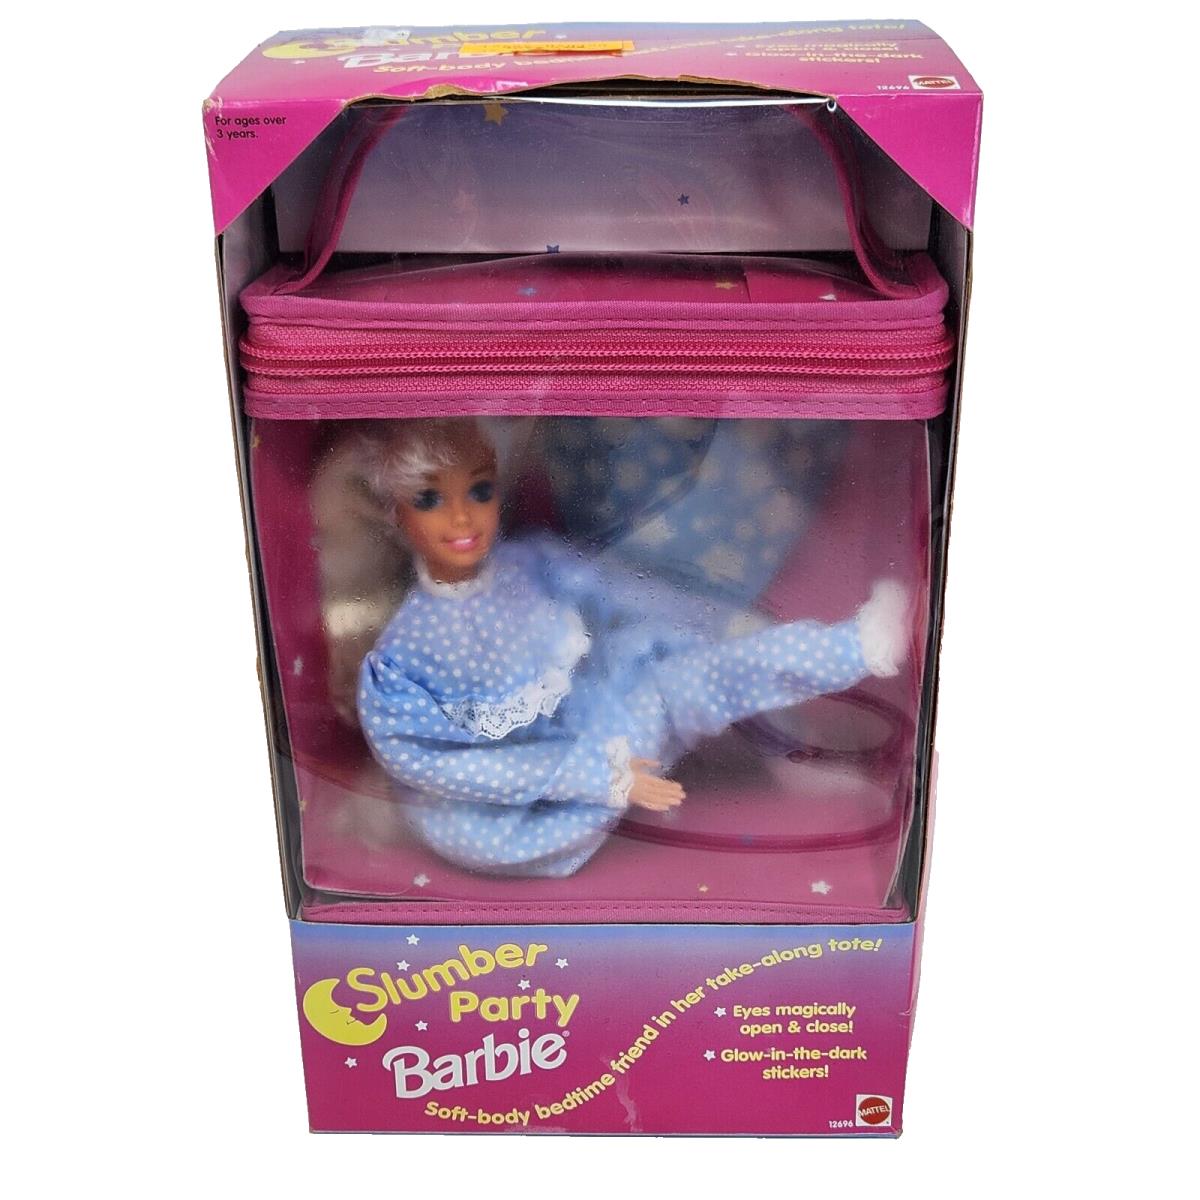 Vintage 1994 Slumber Party Barbie Doll Mattel 12696 IN Box